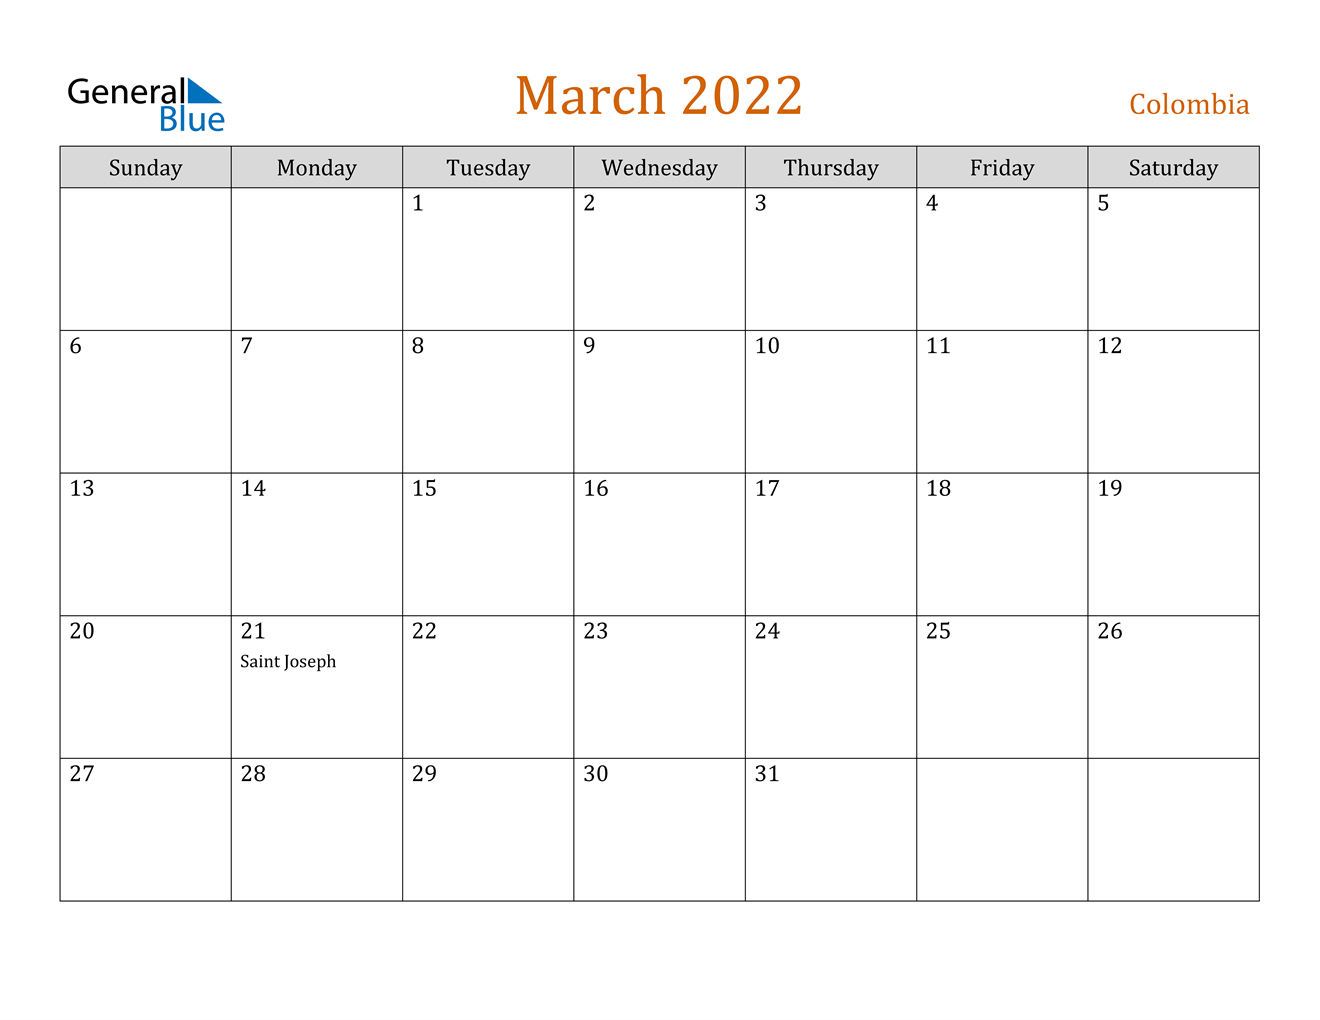 March 2022 Calendar - Colombia